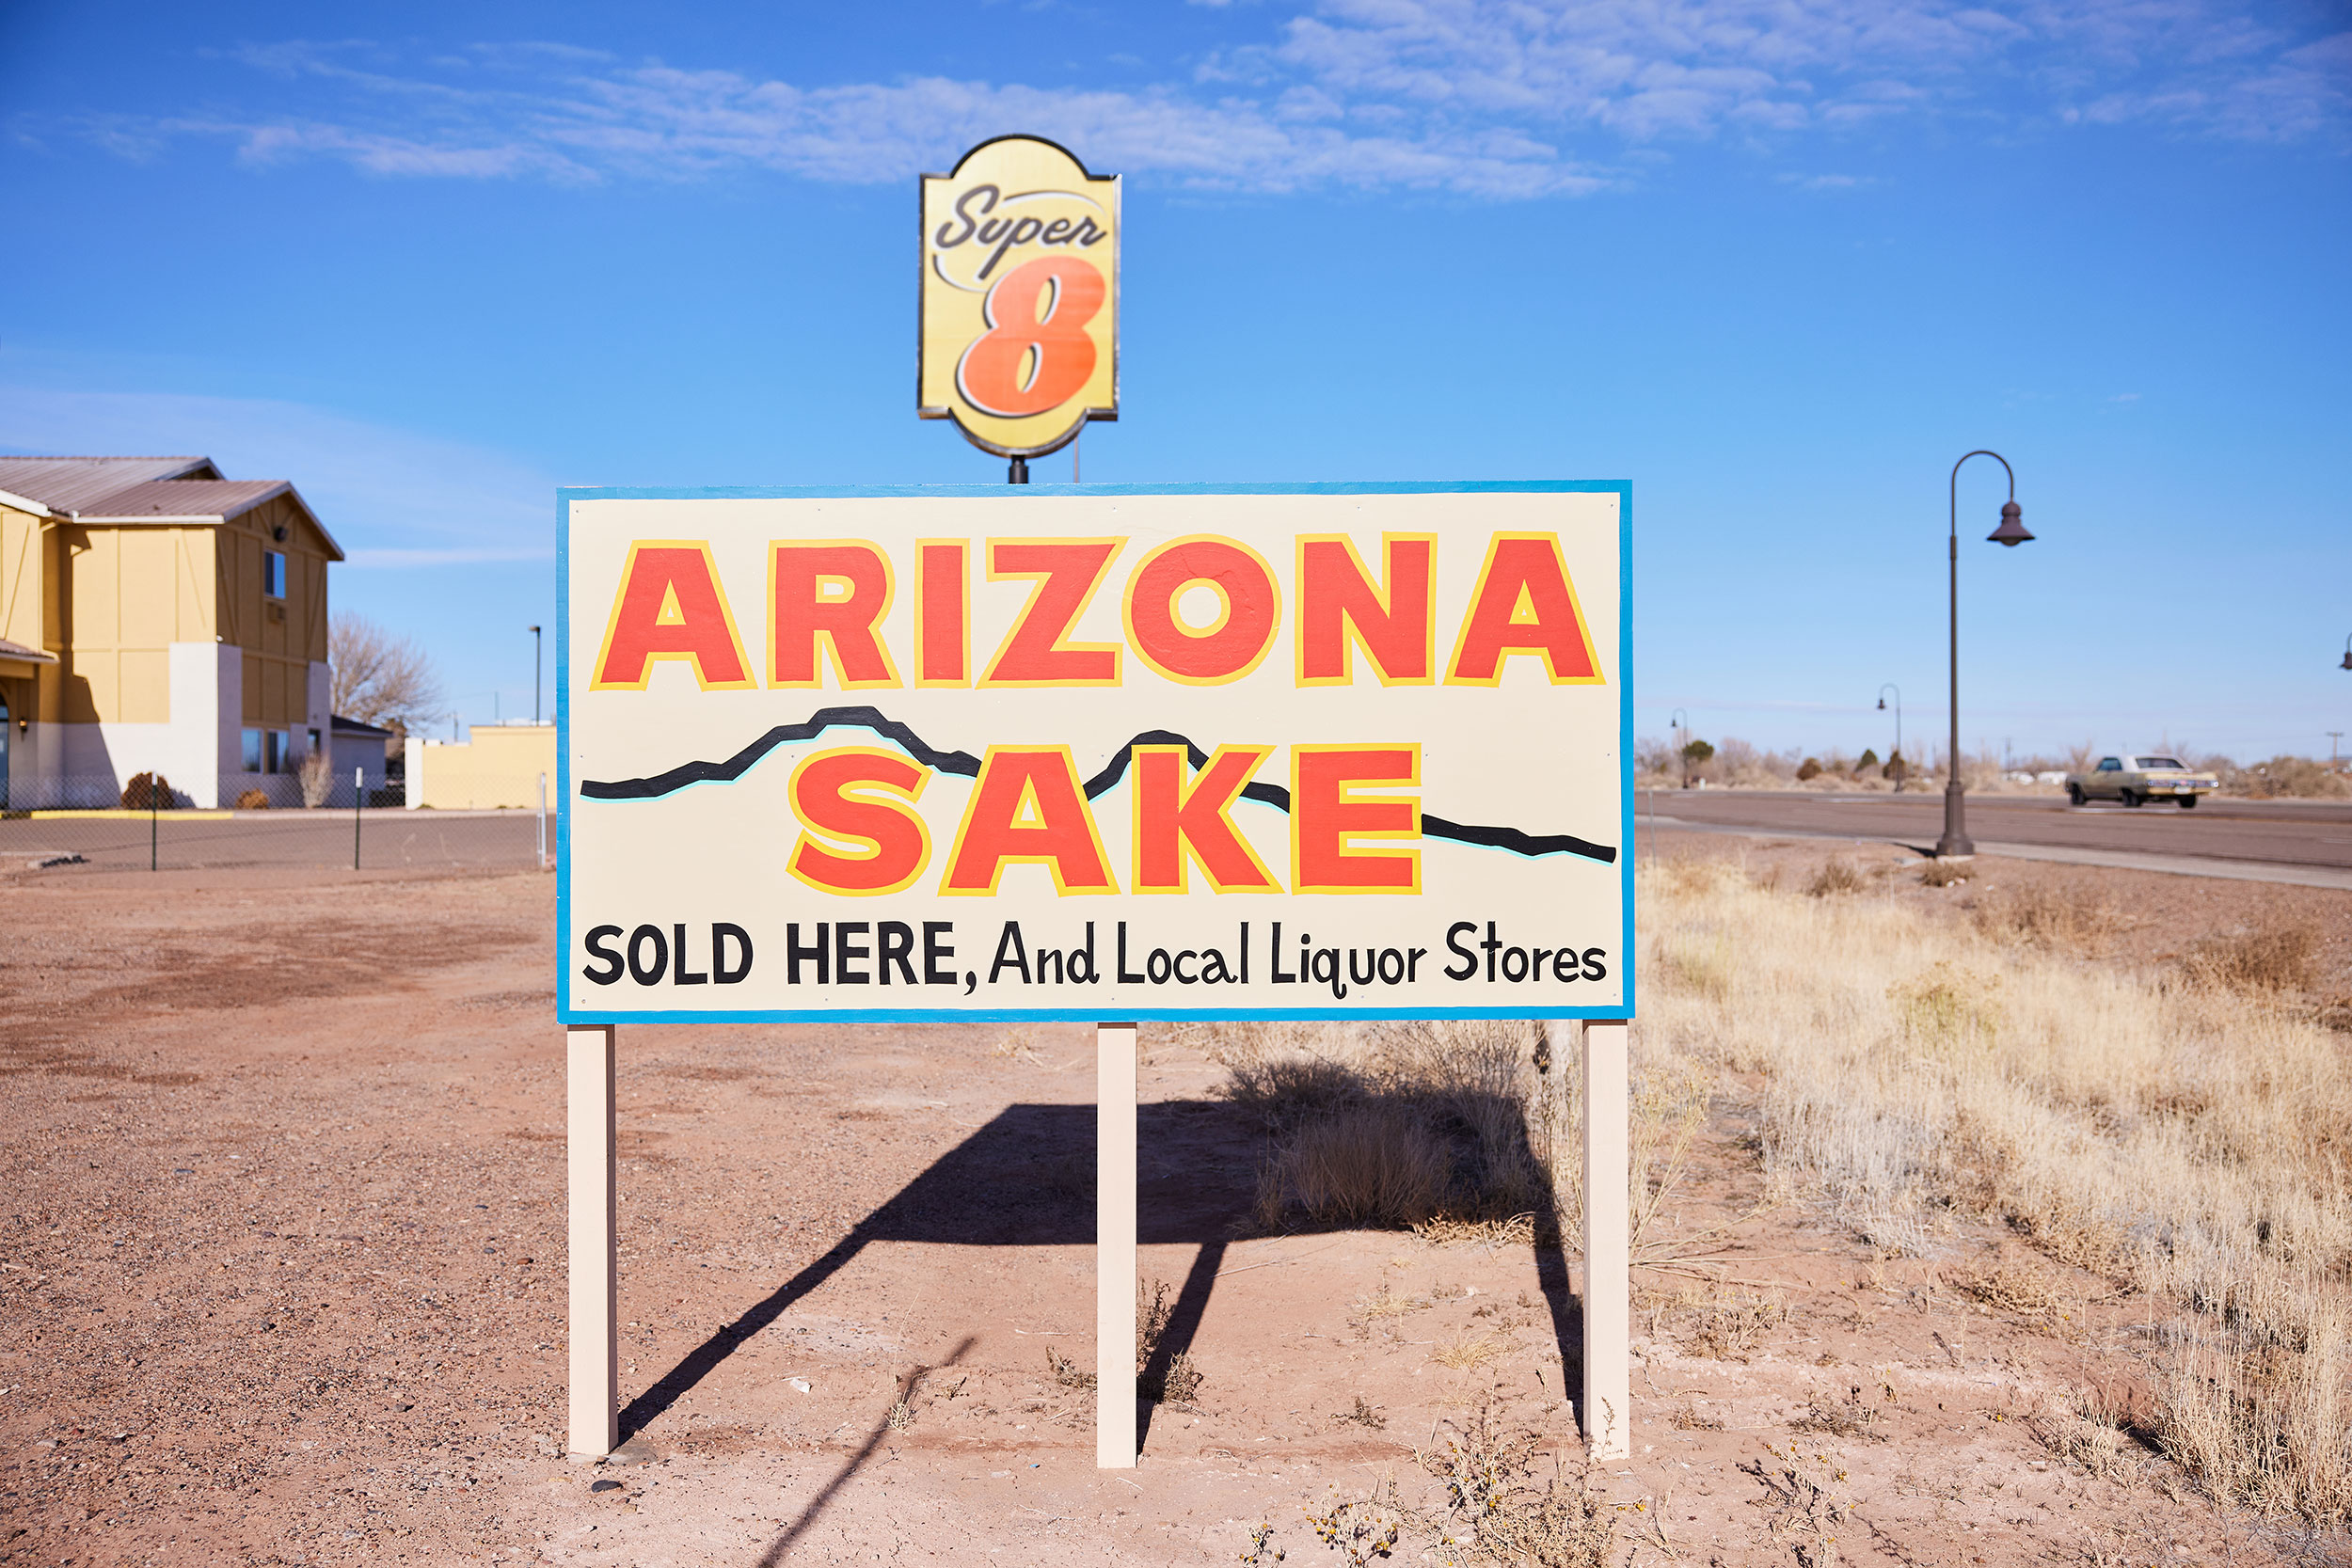 Saveur Arizona Sake - Steve Craft Photography, Phoenix, Arizona based Commercial, Aviation & Editorial Photographer